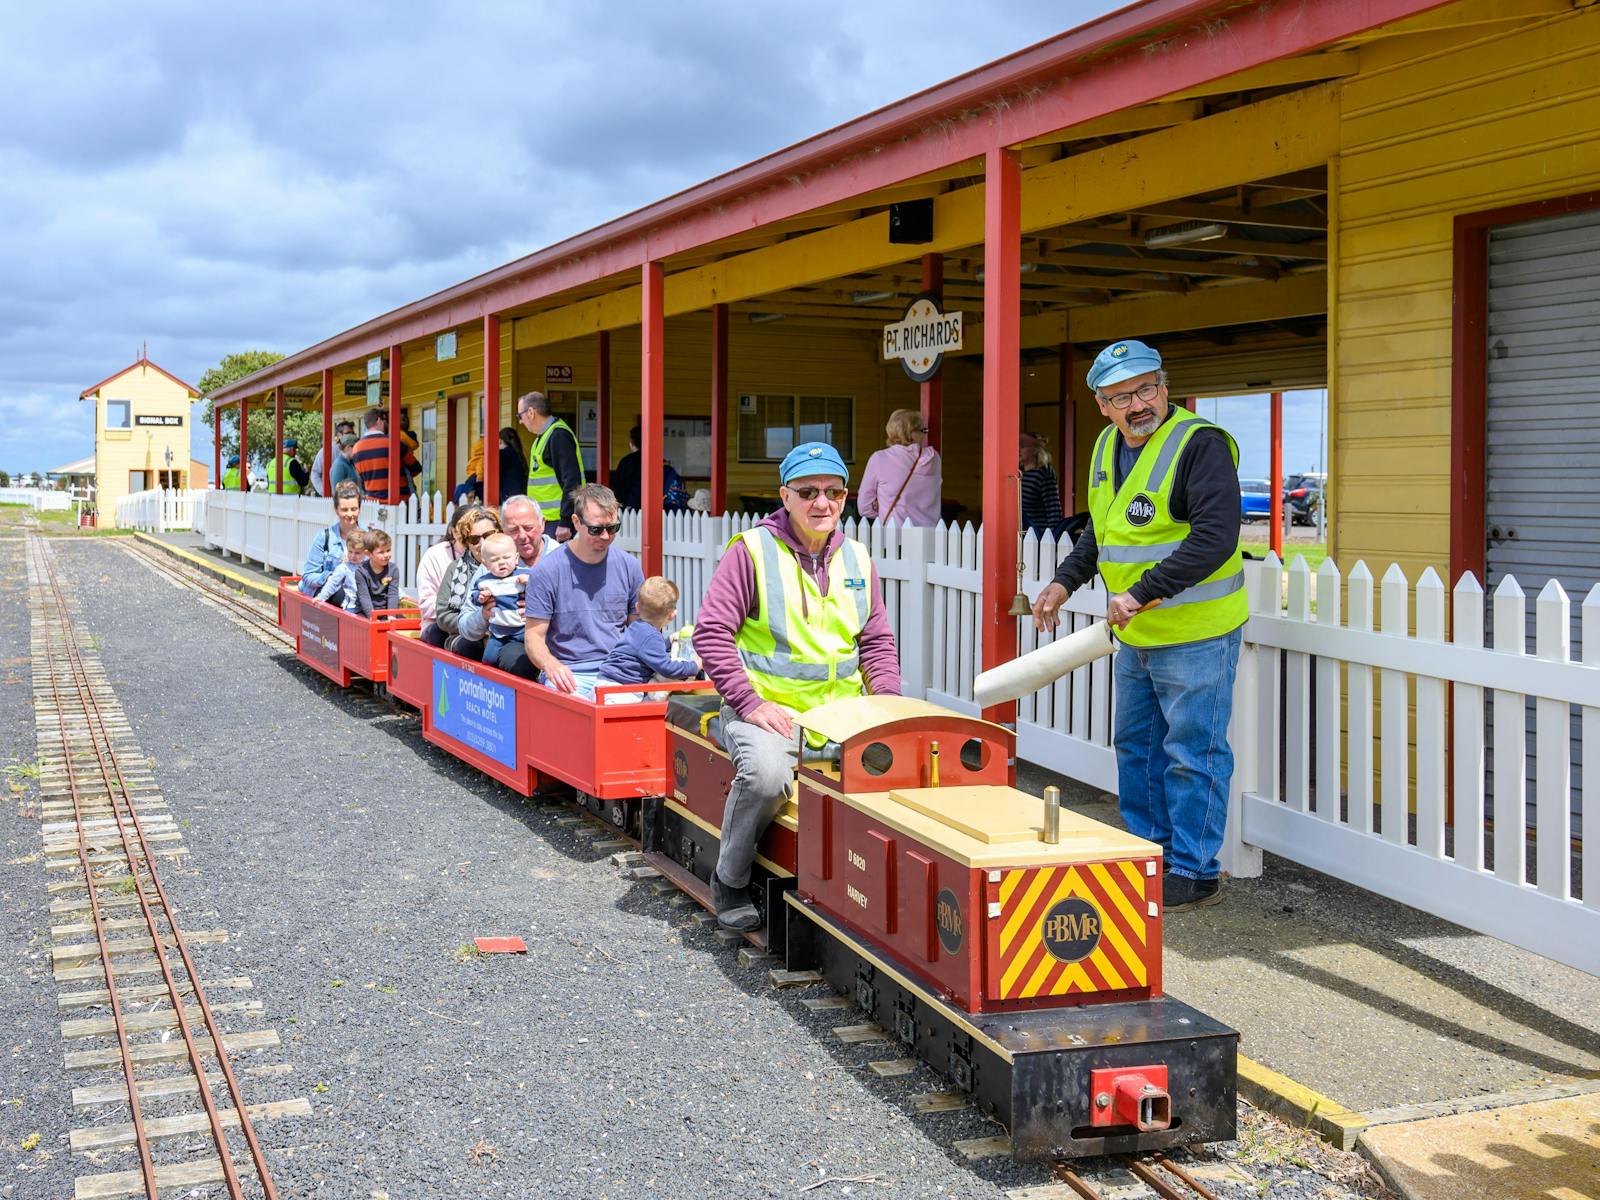 A family sit on a mini train at Portarlington Miniature Railway.